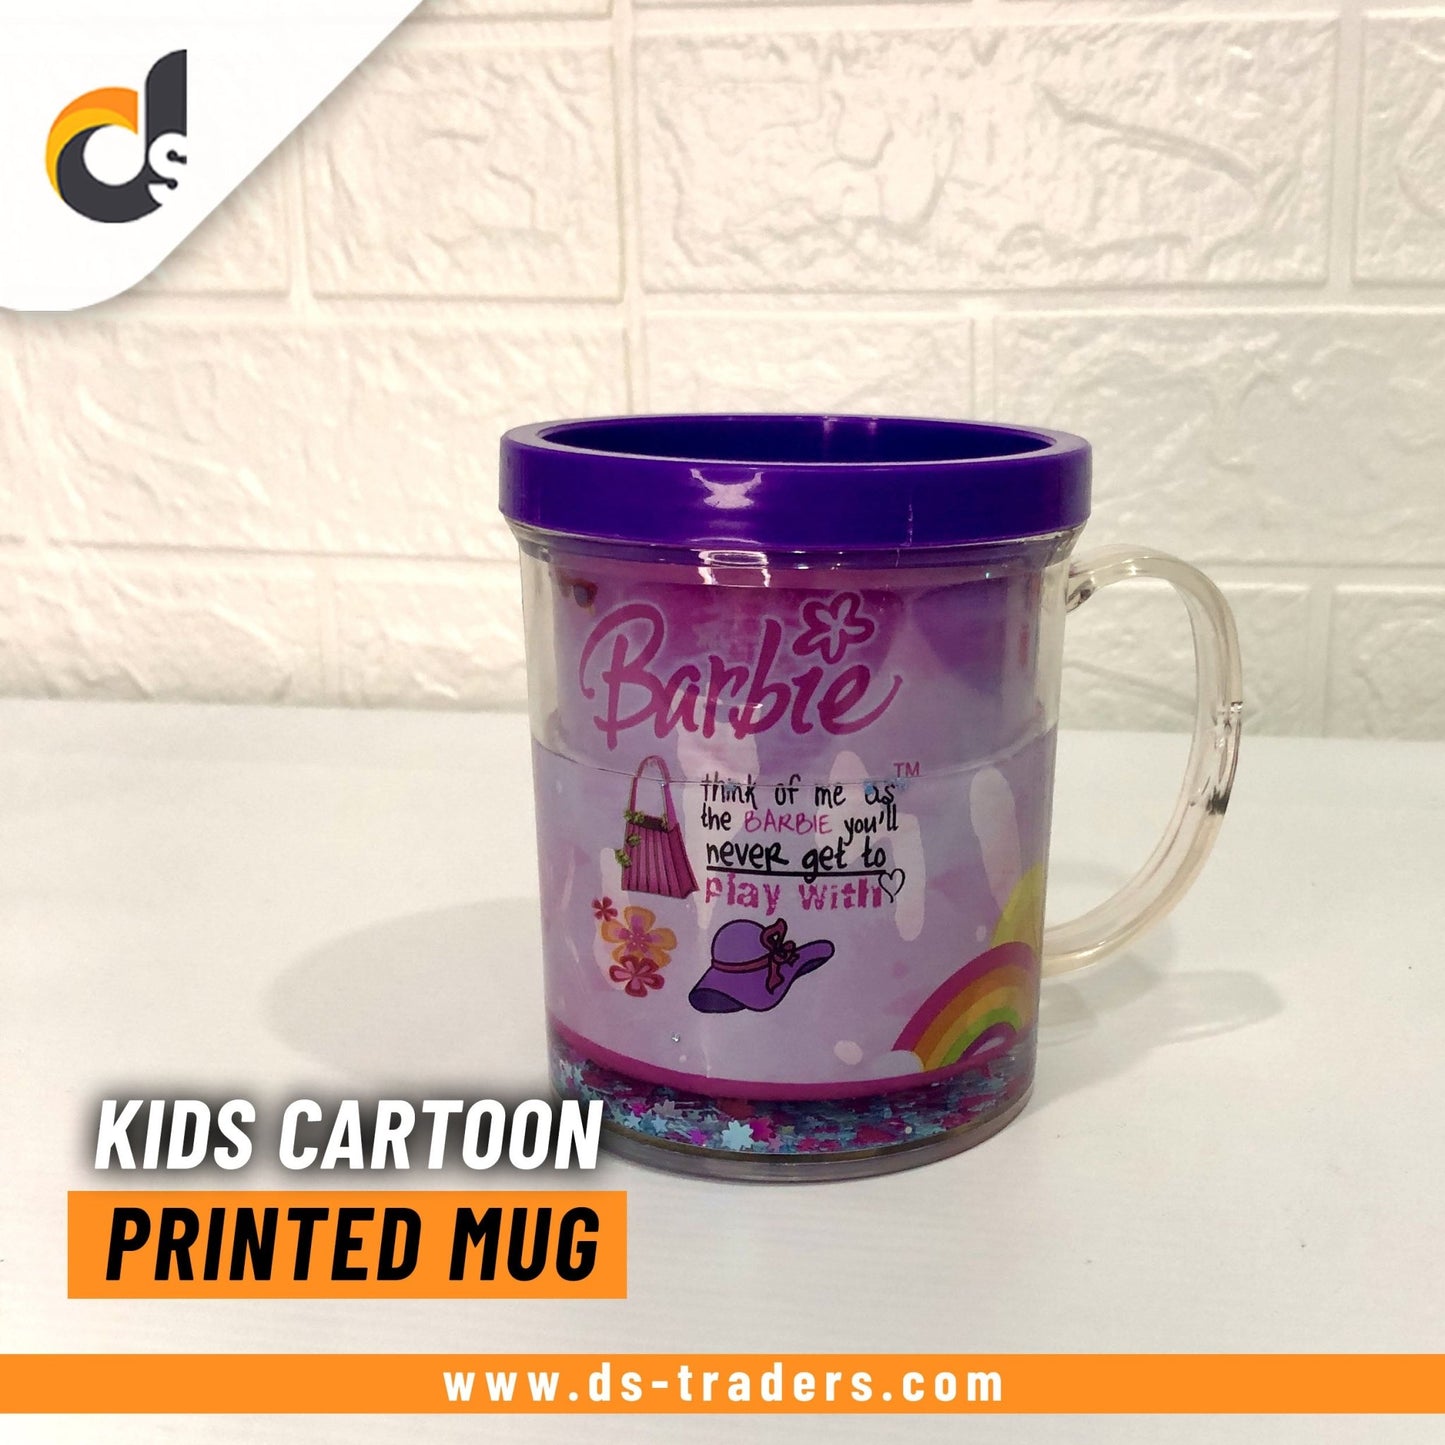 Kids Cartoon Printed Mug - DS Traders